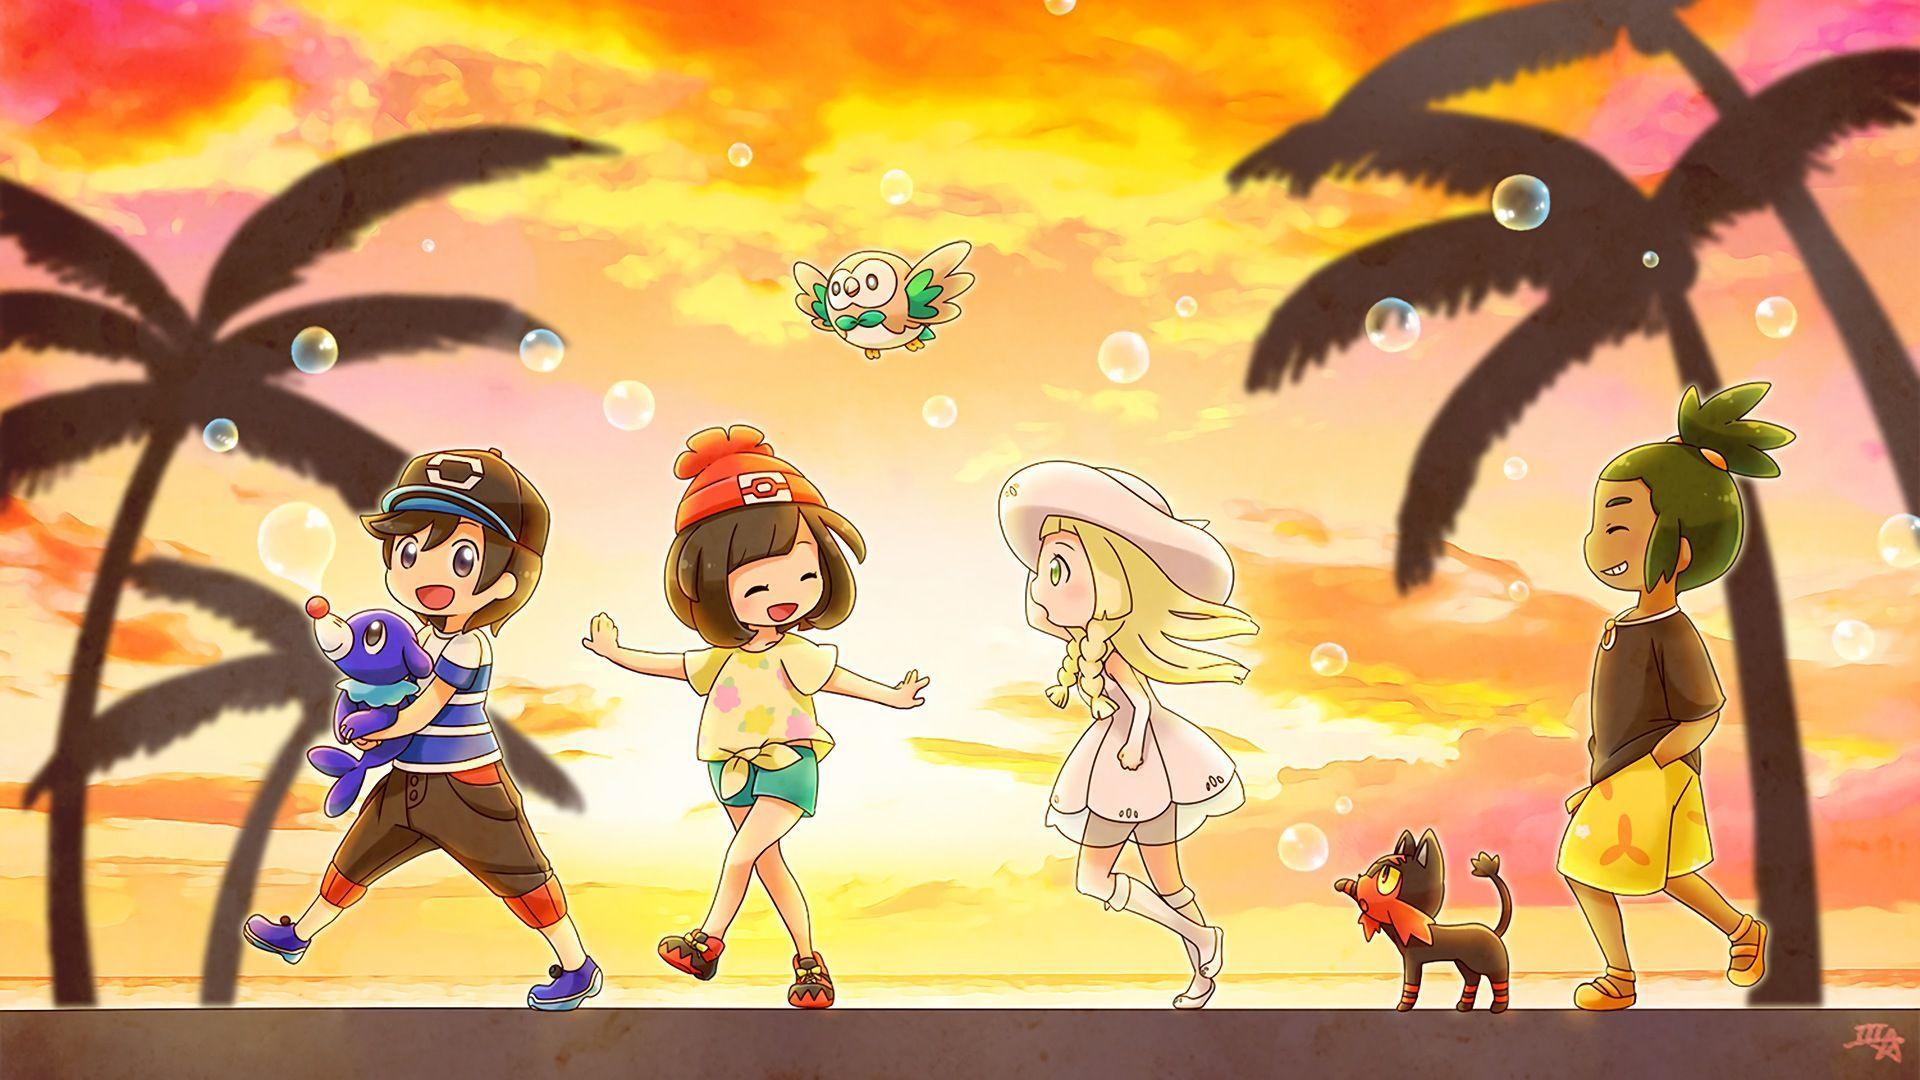 ipad pokemon sun wallpaper. Download this HD wallpaper Pokemon Sun